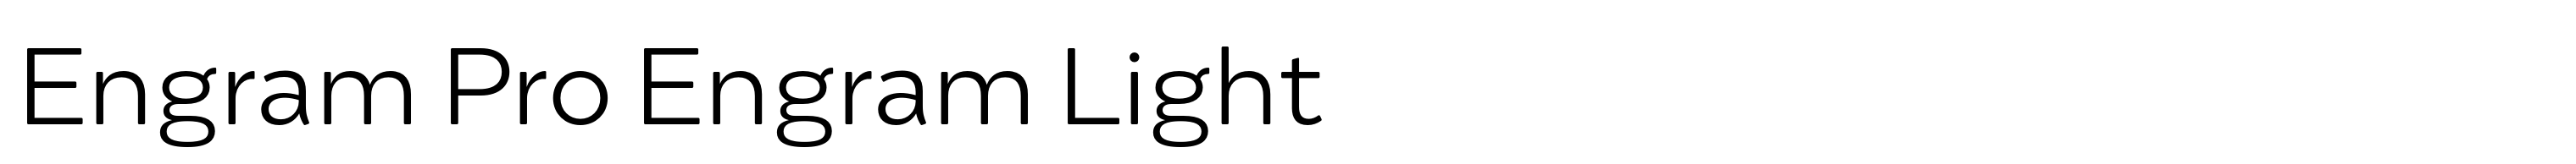 Engram Pro Engram Light